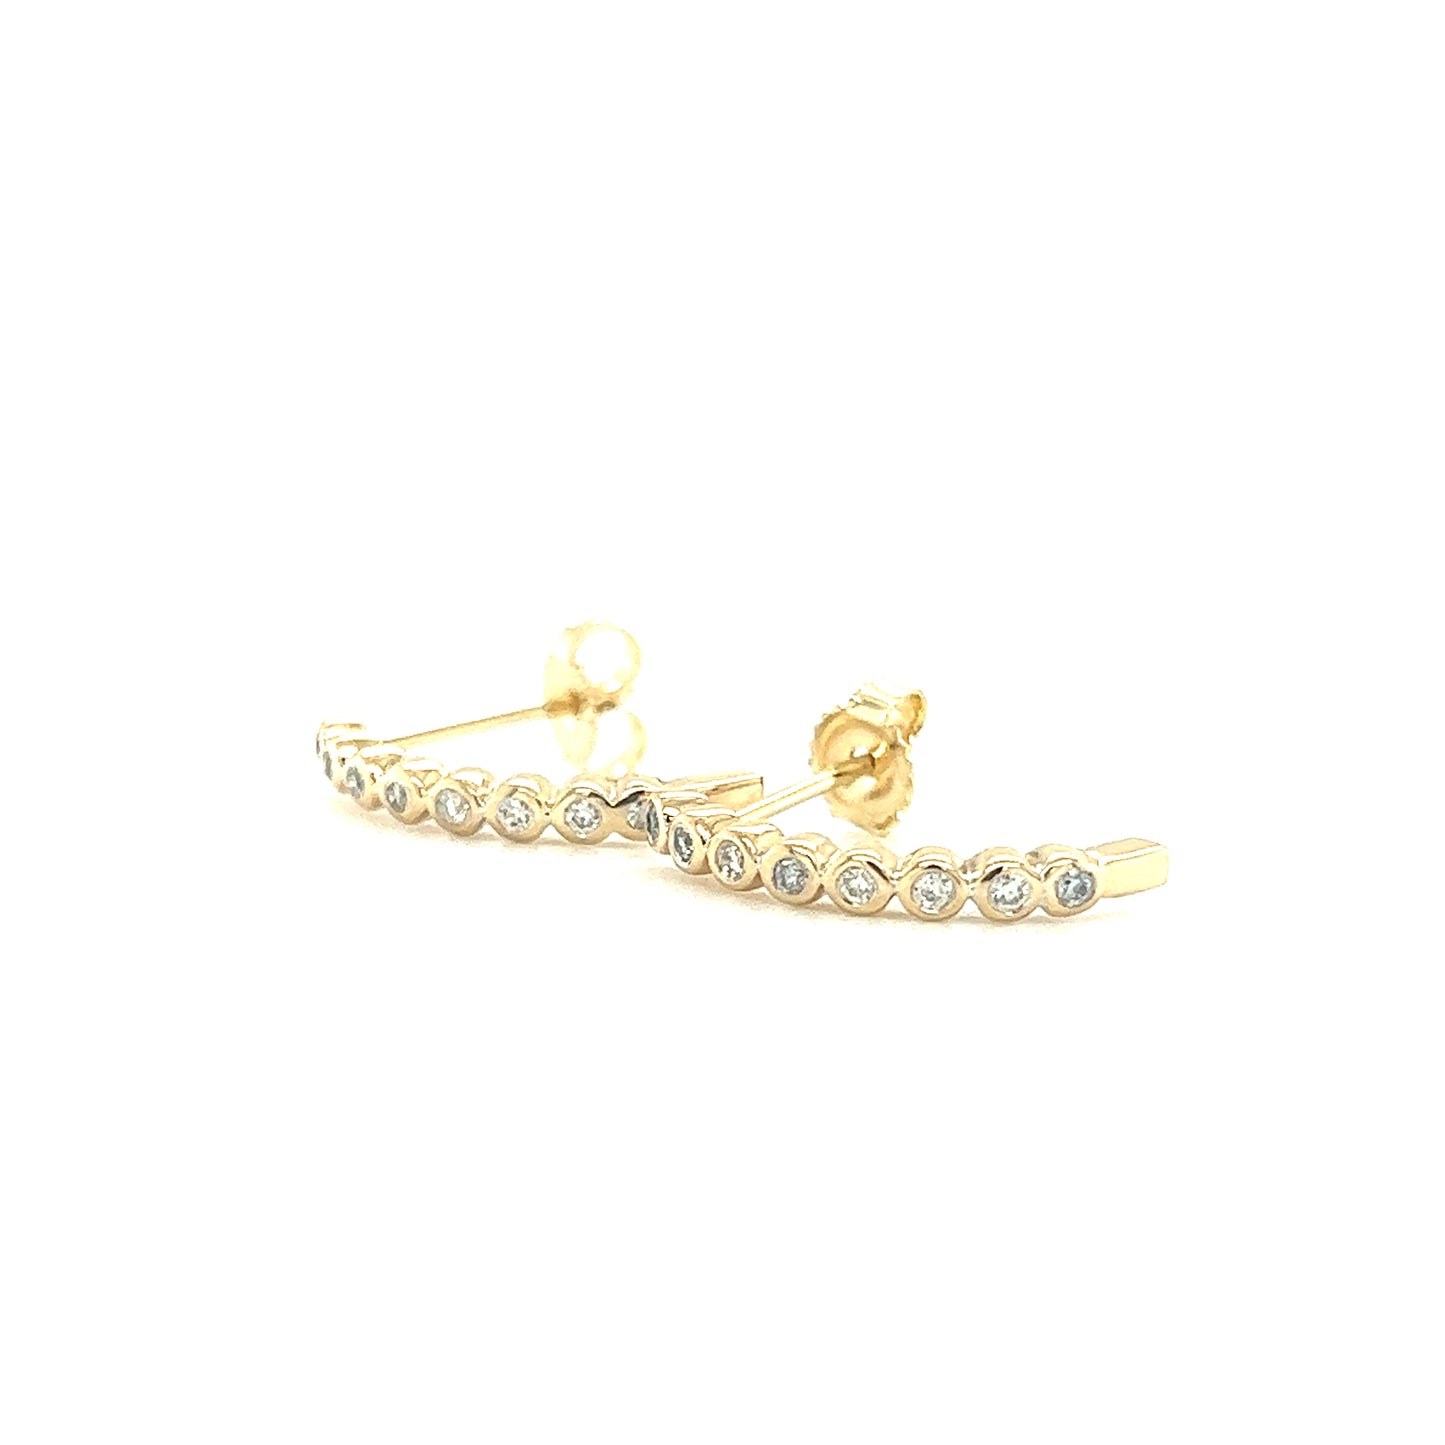 J-Hoop Earrings with Sixteen Diamonds in 14K Yellow Gold Laying Flat View